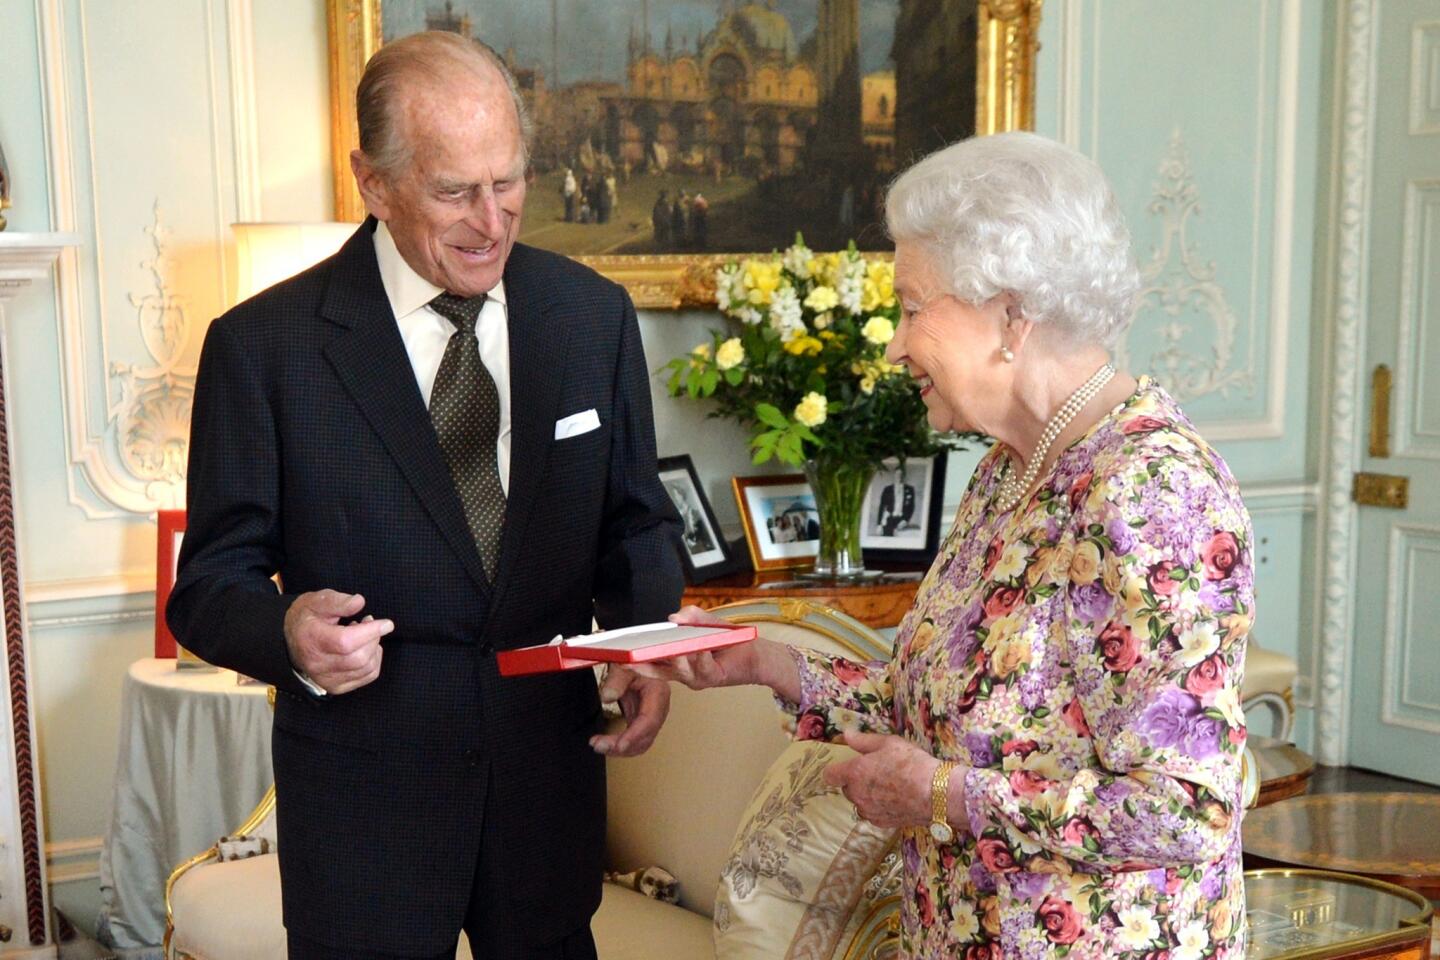 Prince Philip receives the Order of New Zealand in 2013 from Queen Elizabeth II.